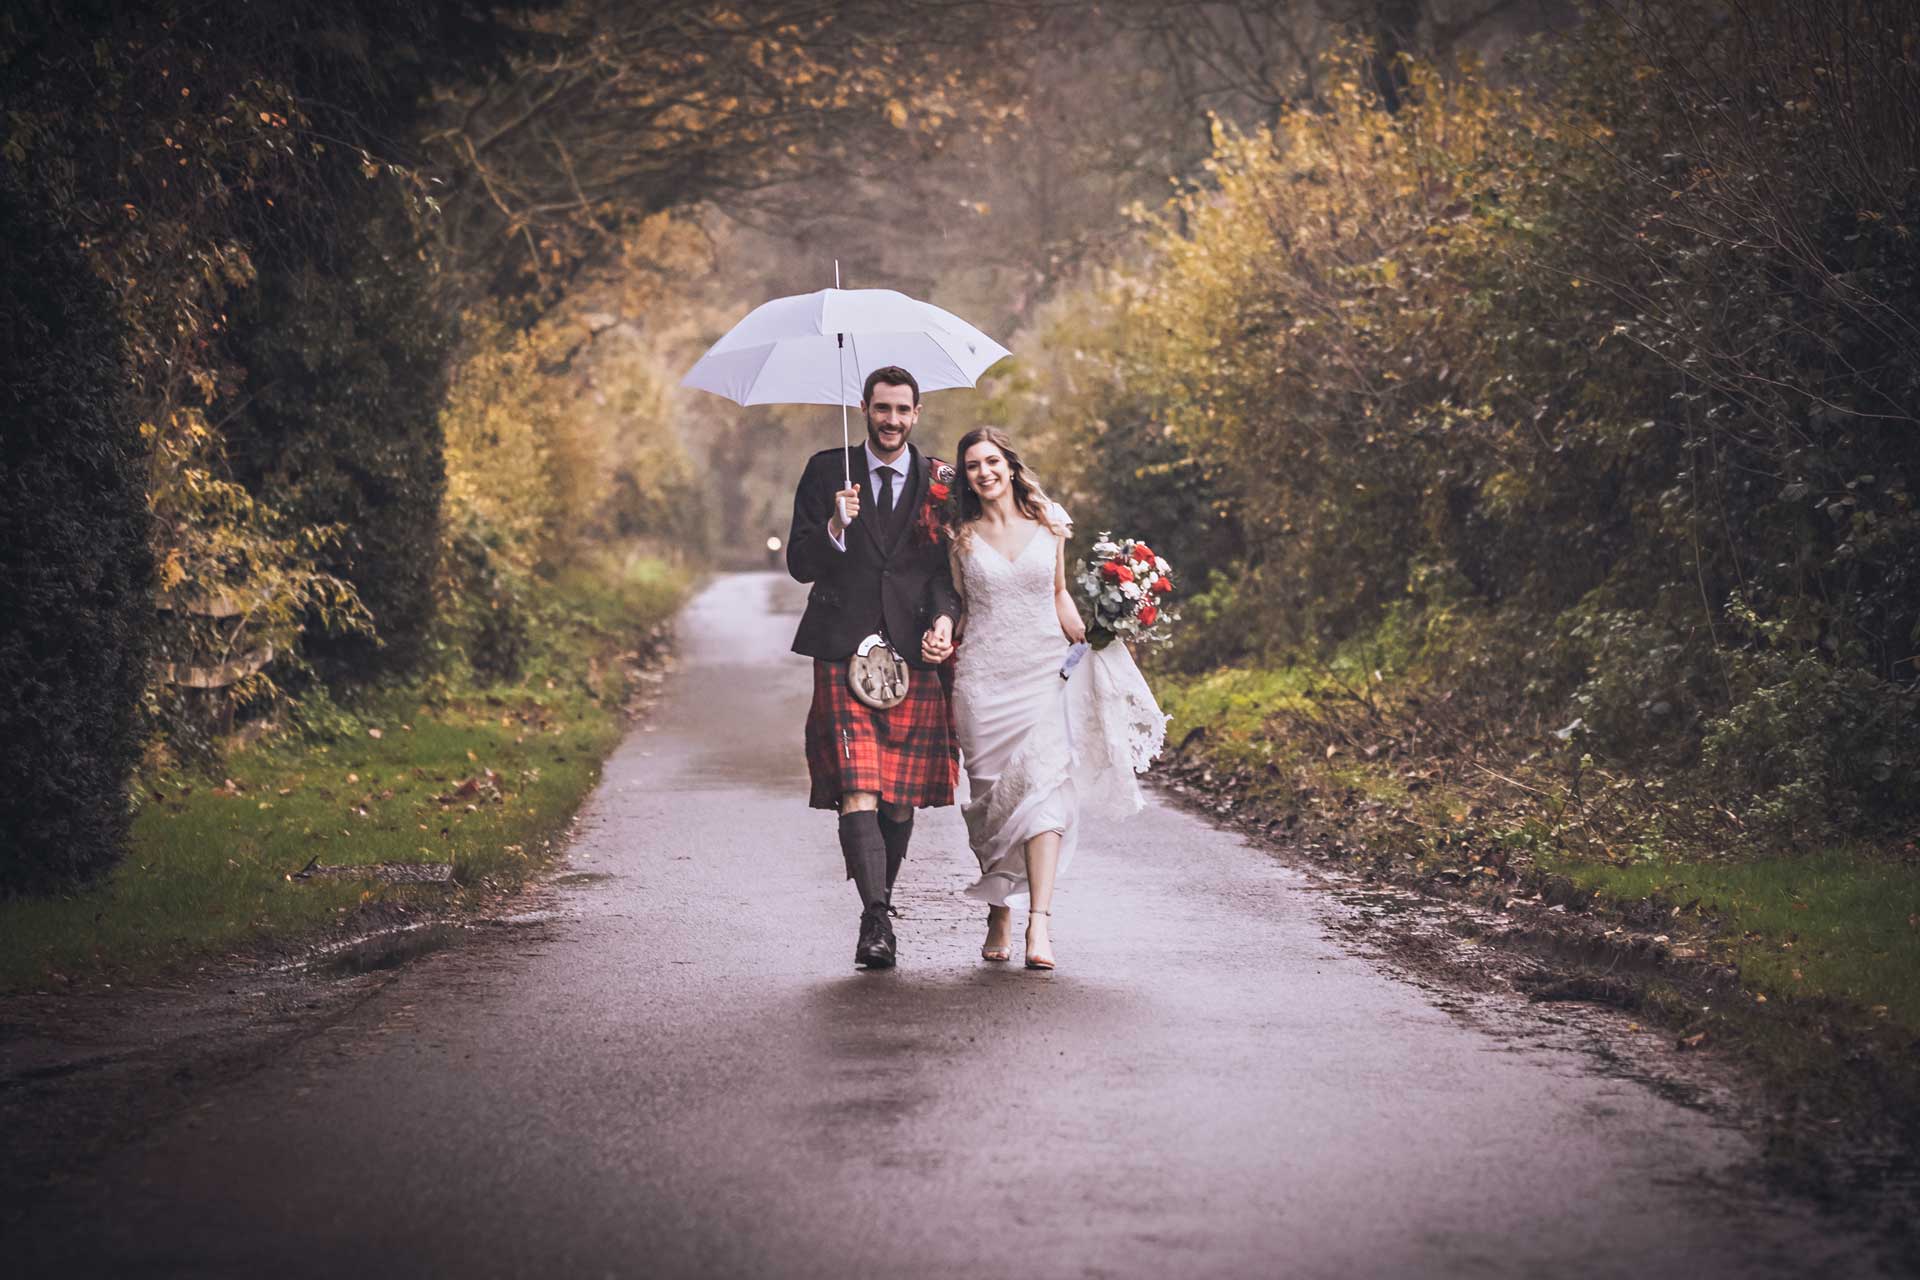 Umbrella for Bride and Groom